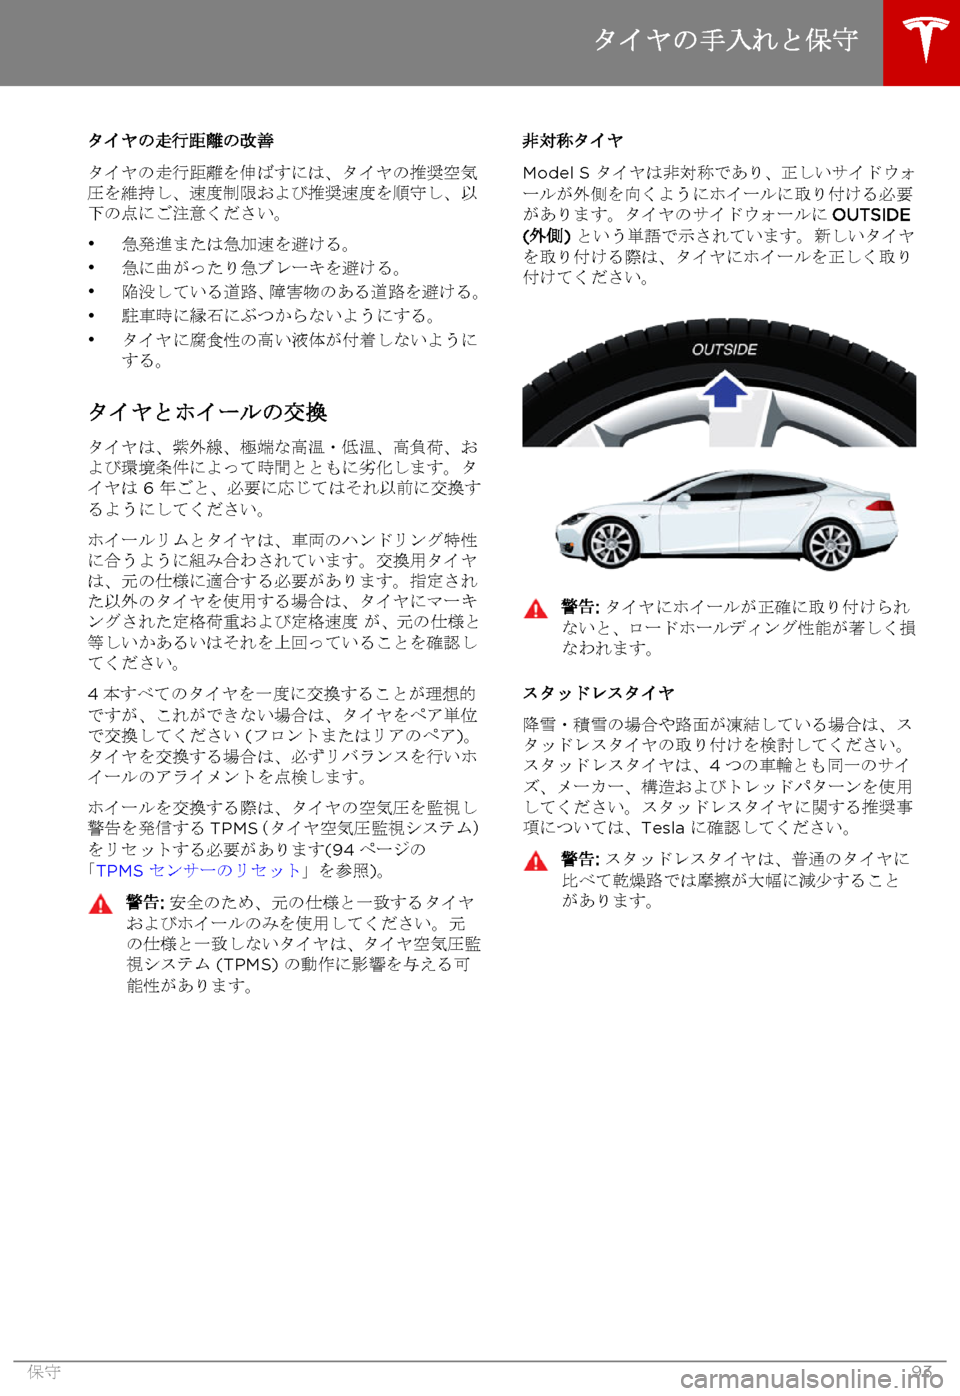 TESLA MODEL S 2015  取扱説明書 (in Japanese)  タイヤの走行距離の改善
タイヤの走行距離を伸ばすには、タイヤの推奨空気圧を維持し、速度制限および推奨速度を順守し、以下の点にご注意くだ�